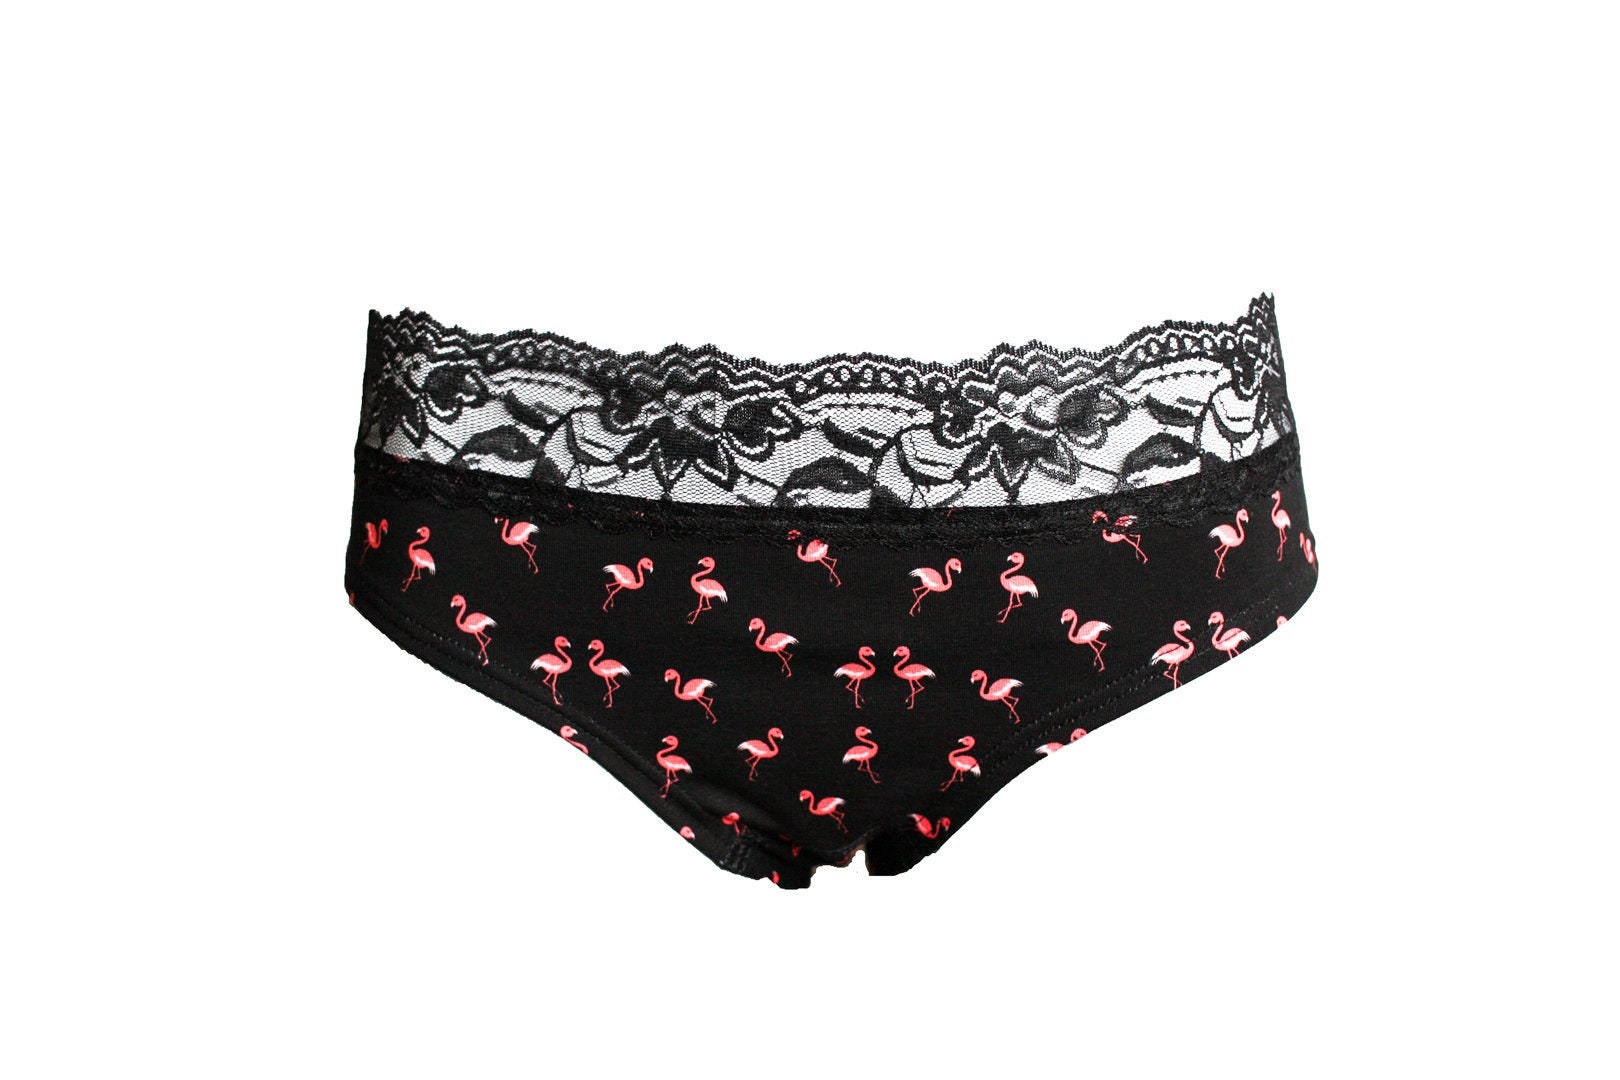 6ixty8ight Cotton Hipster Panty Ladies Underwear (Flamingo Blush